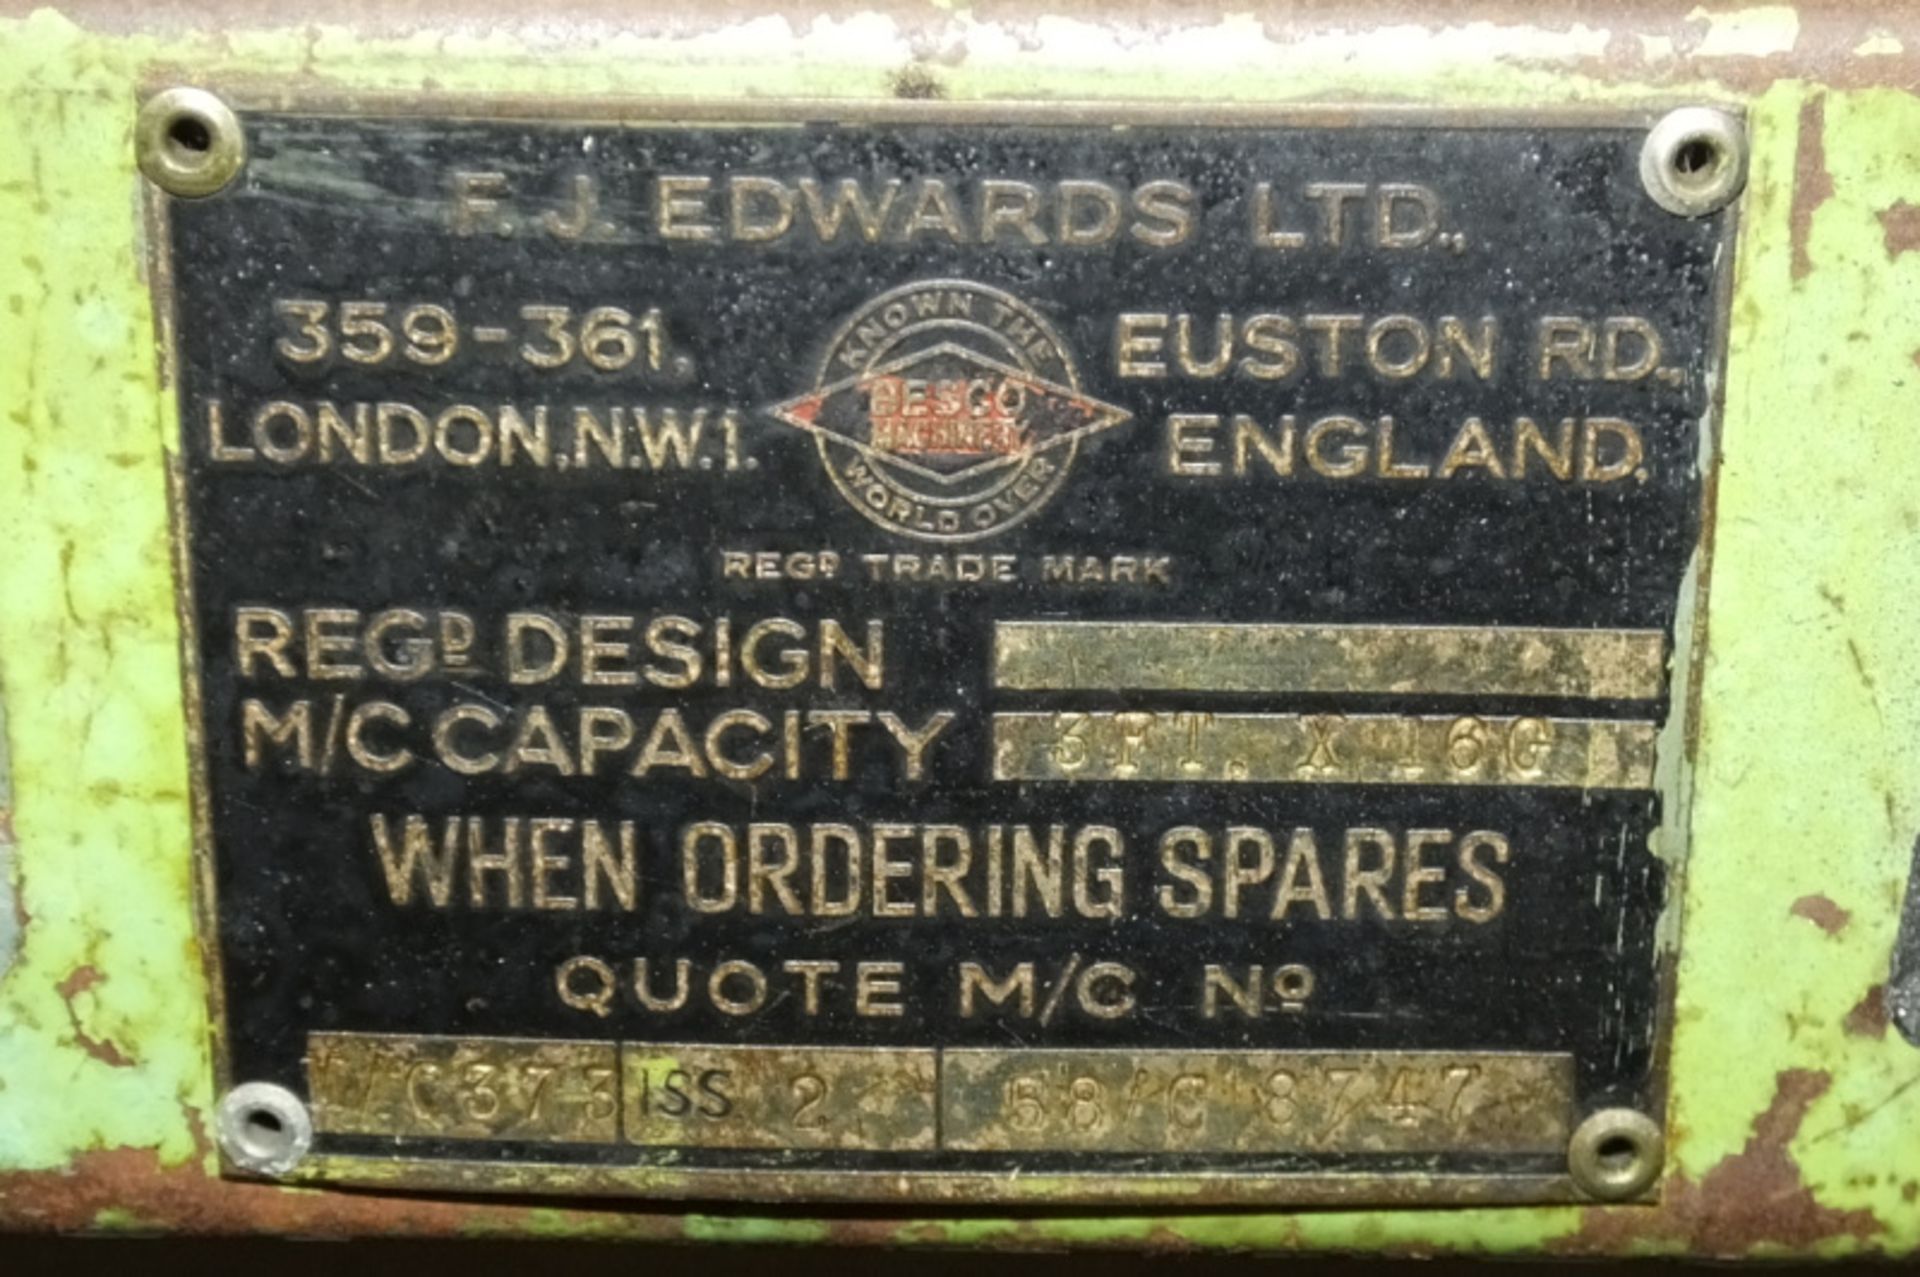 FJ Edwards Ltd manual guillotine - machine no 3780 ISS 2 - 88C 8747 - 3ft x 16G - Image 6 of 6